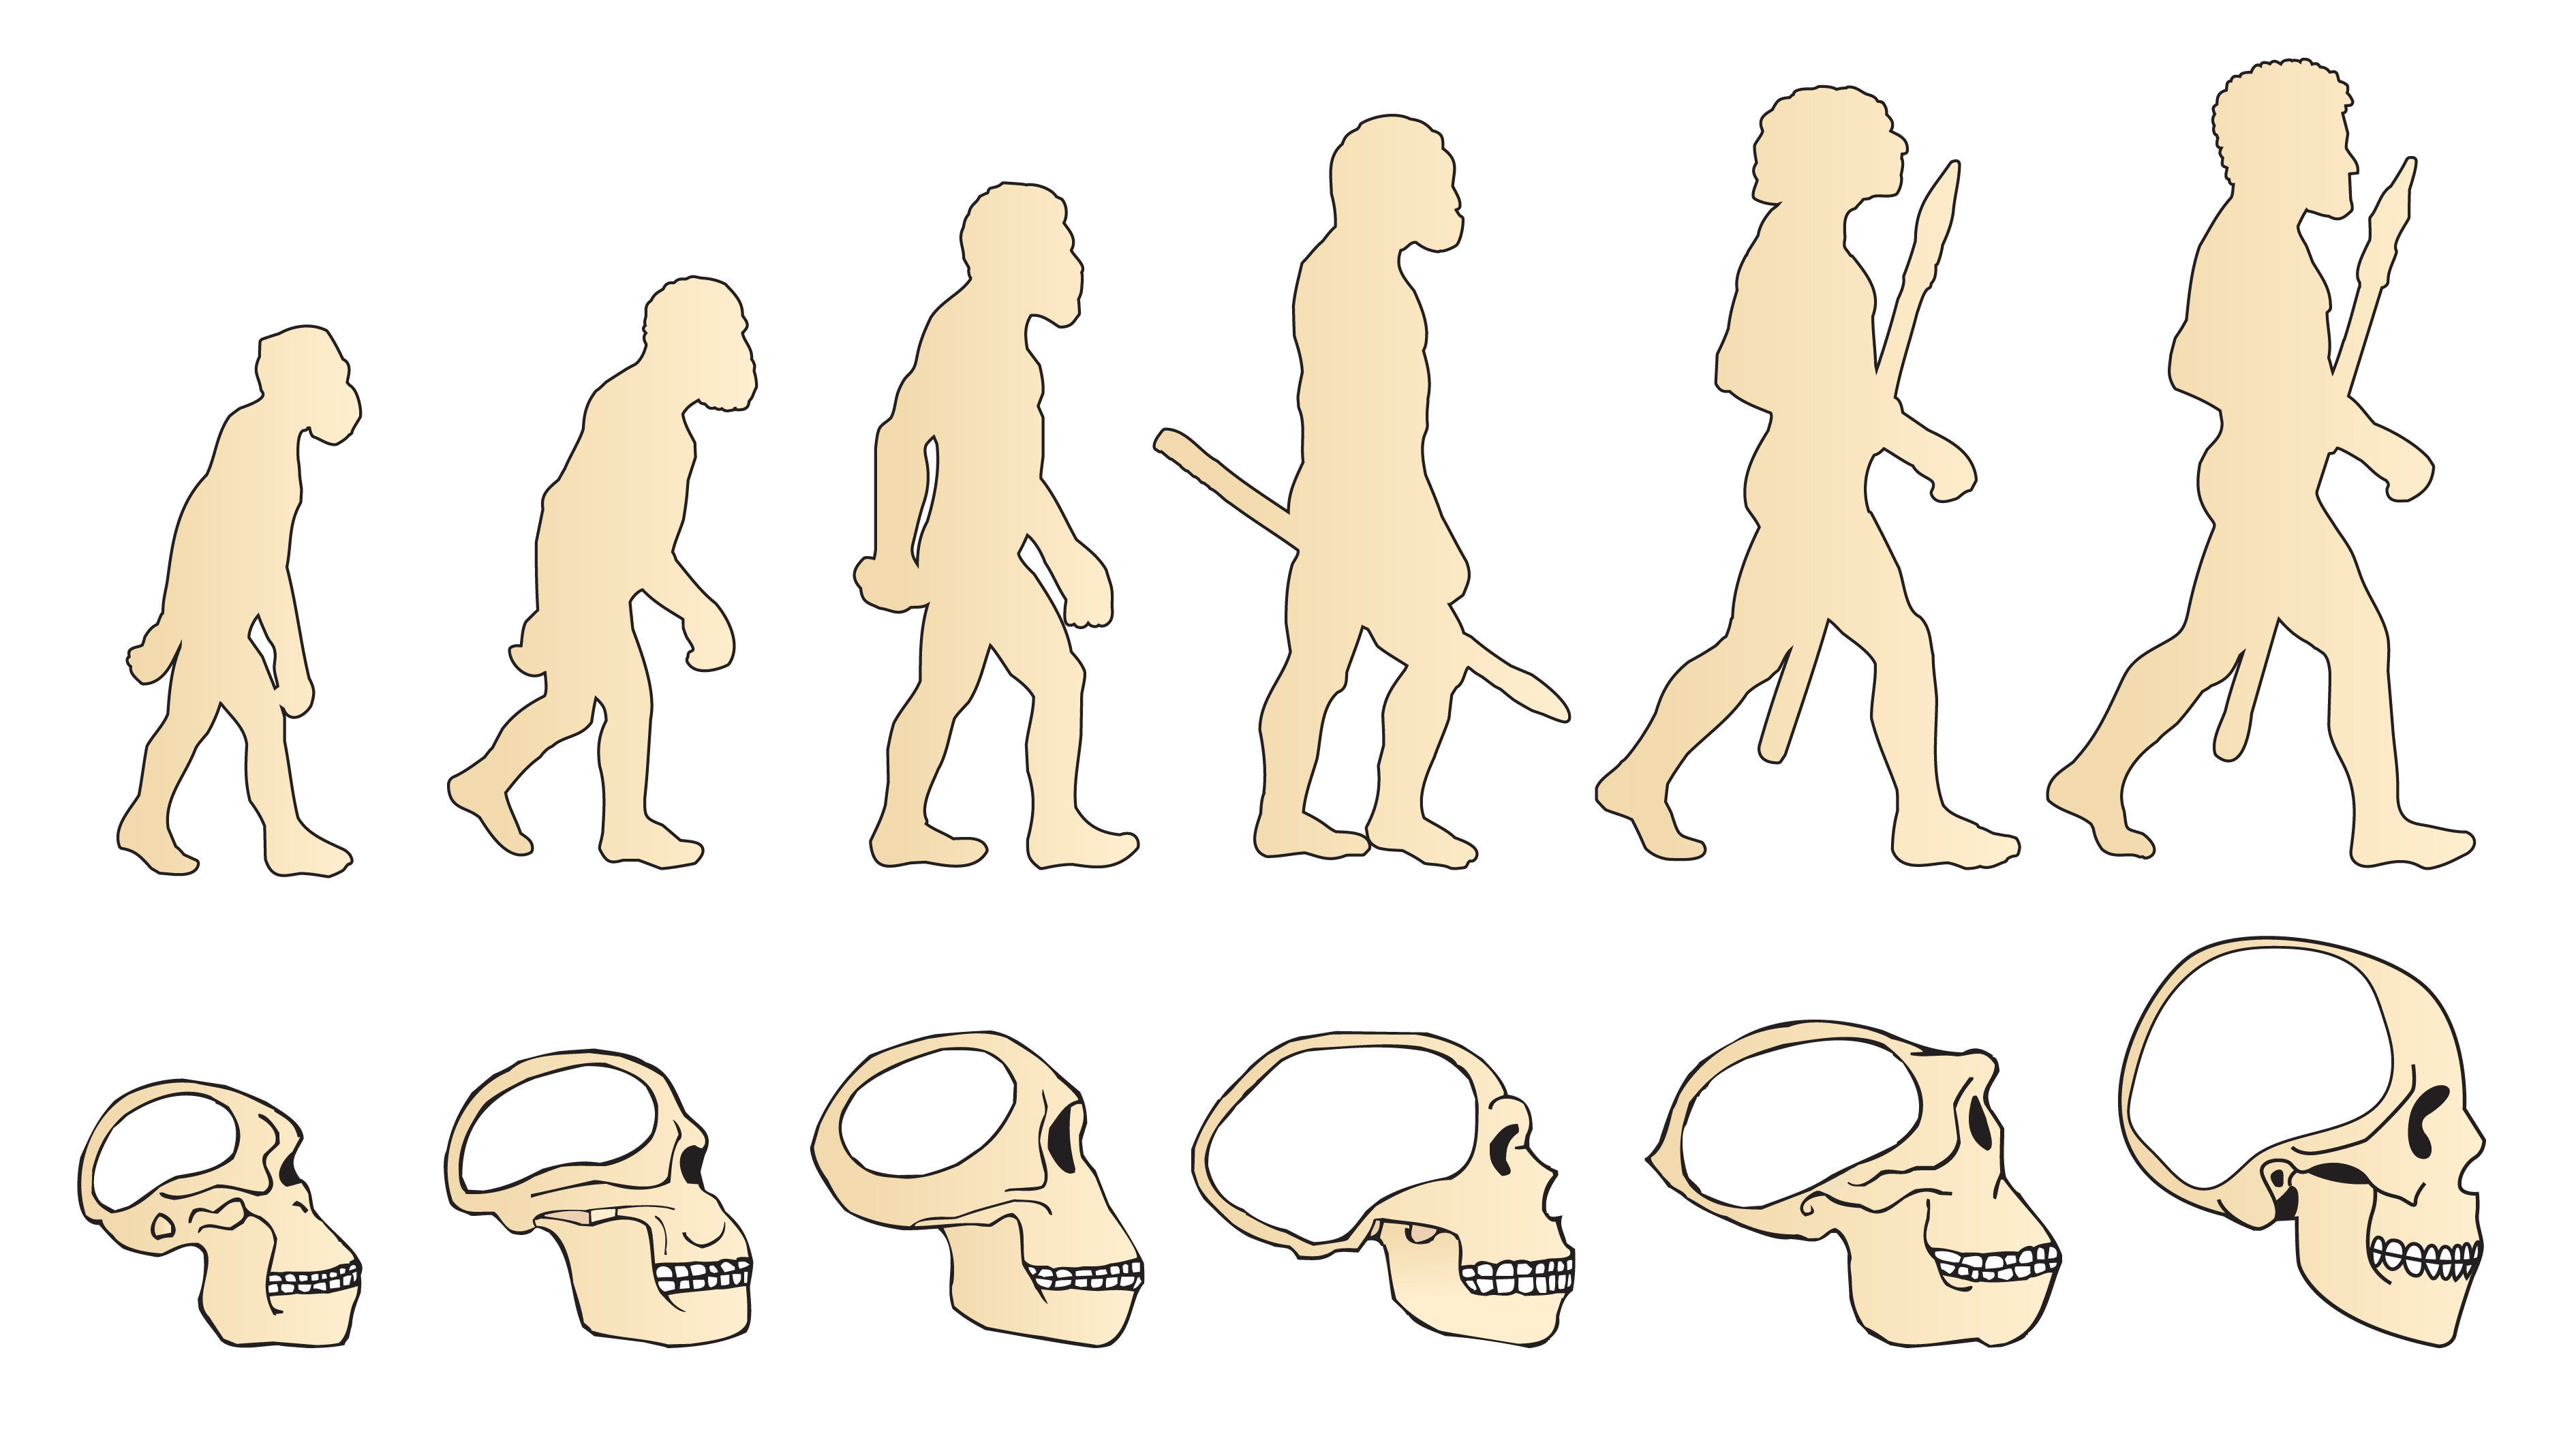 Эволюция размера мозга. Эволюция черепа человека. Эволюция человека от обезьяны череп. Эволюция черепа обезьяны и человека. Эволюция черепов человека.